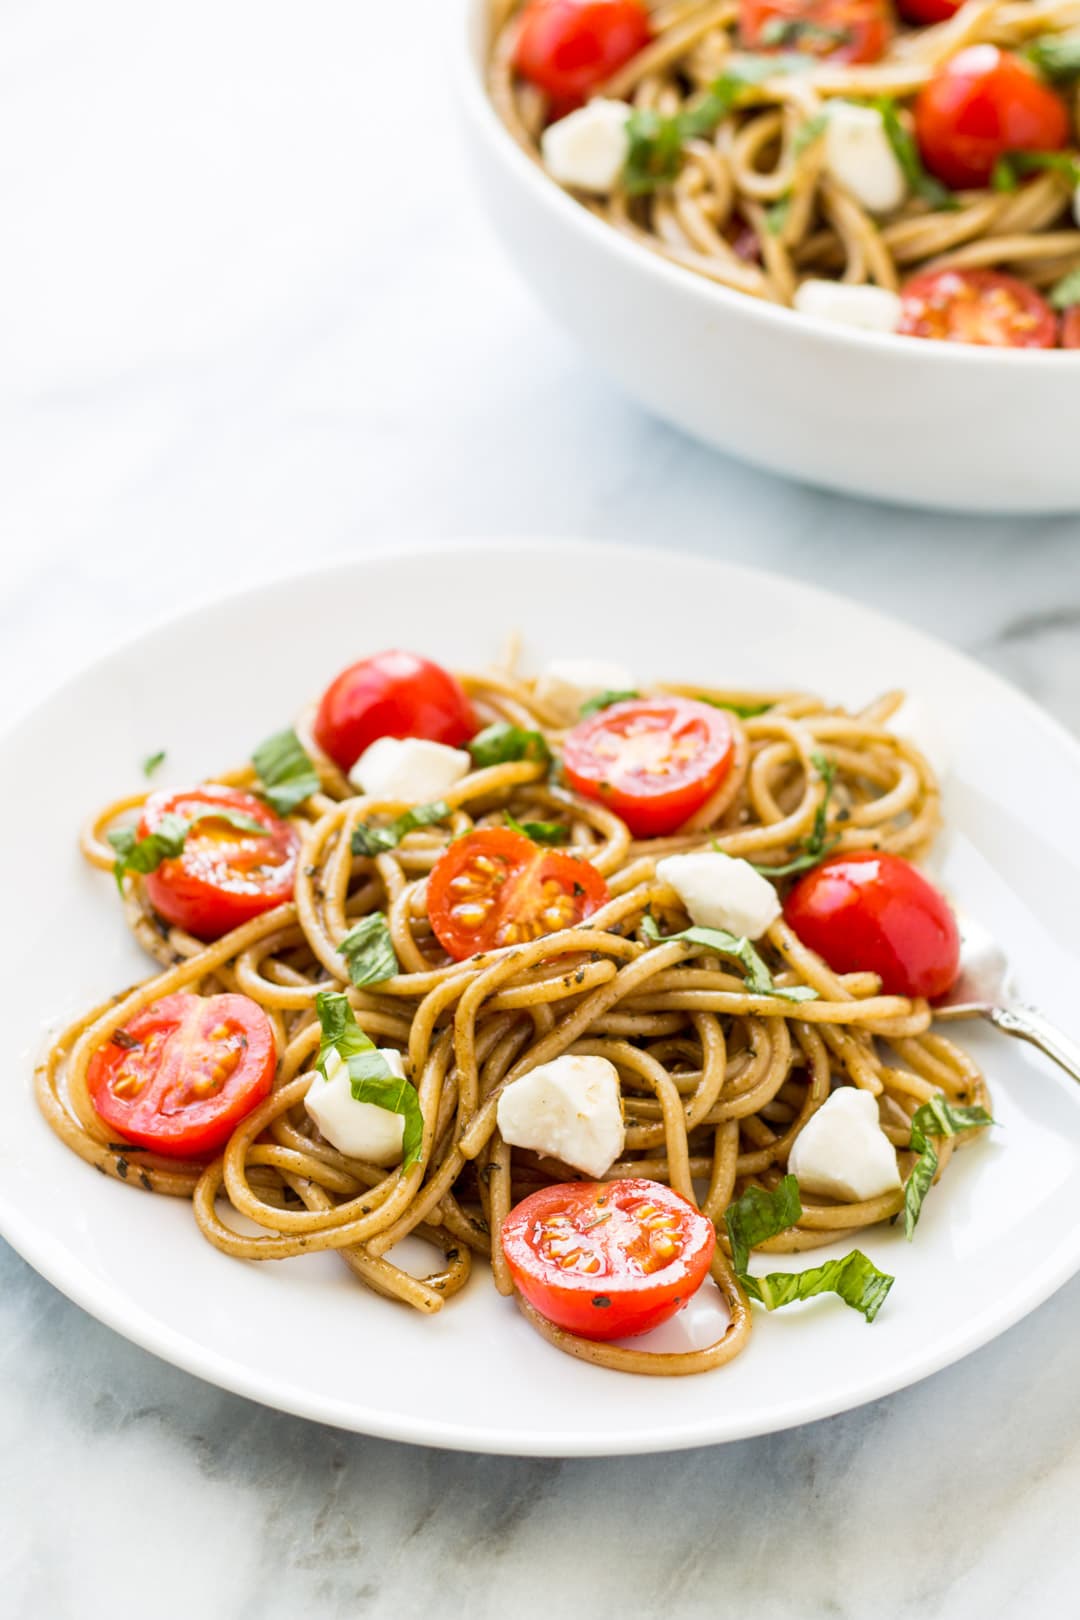 A plate of caprese pasta salad made with gluten-free spaghetti, mozzarella, cherry tomatoes, balsamic vinegar, and basil.